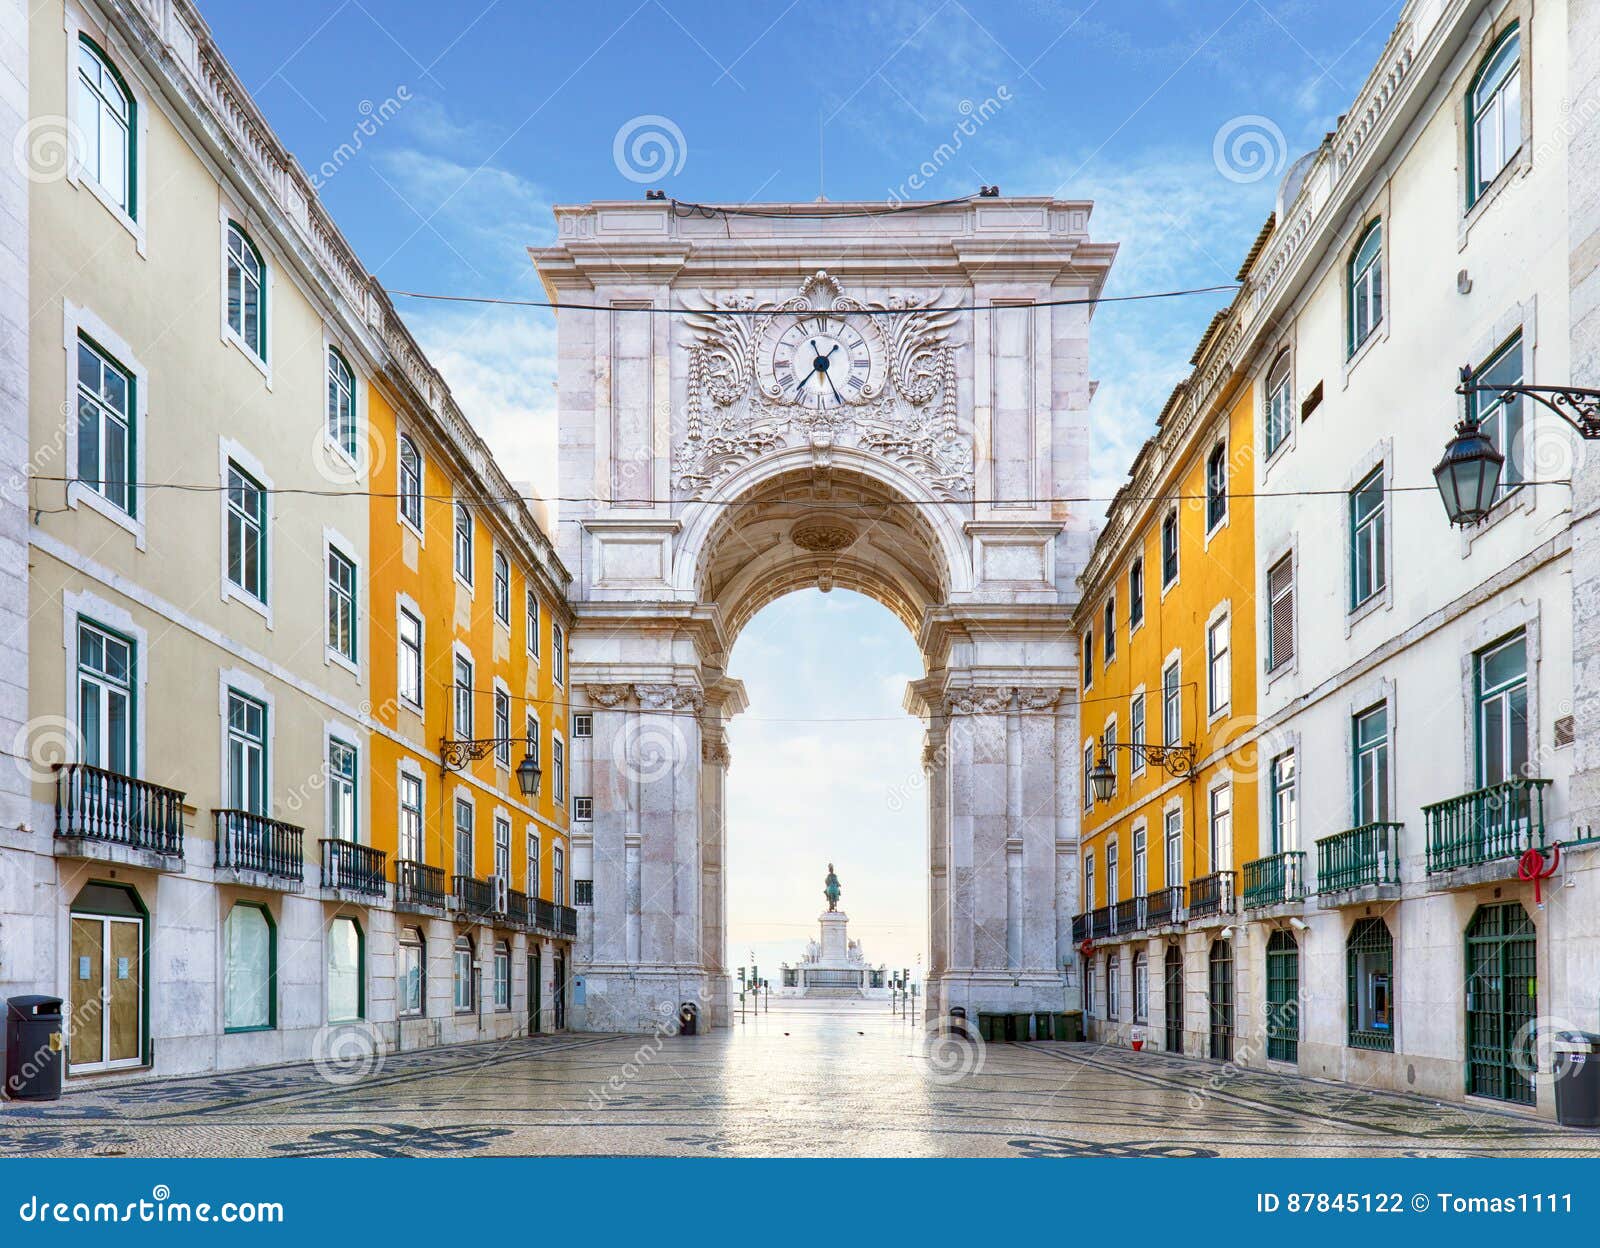 famous arch at the praca do comercio, lisbon, portugal